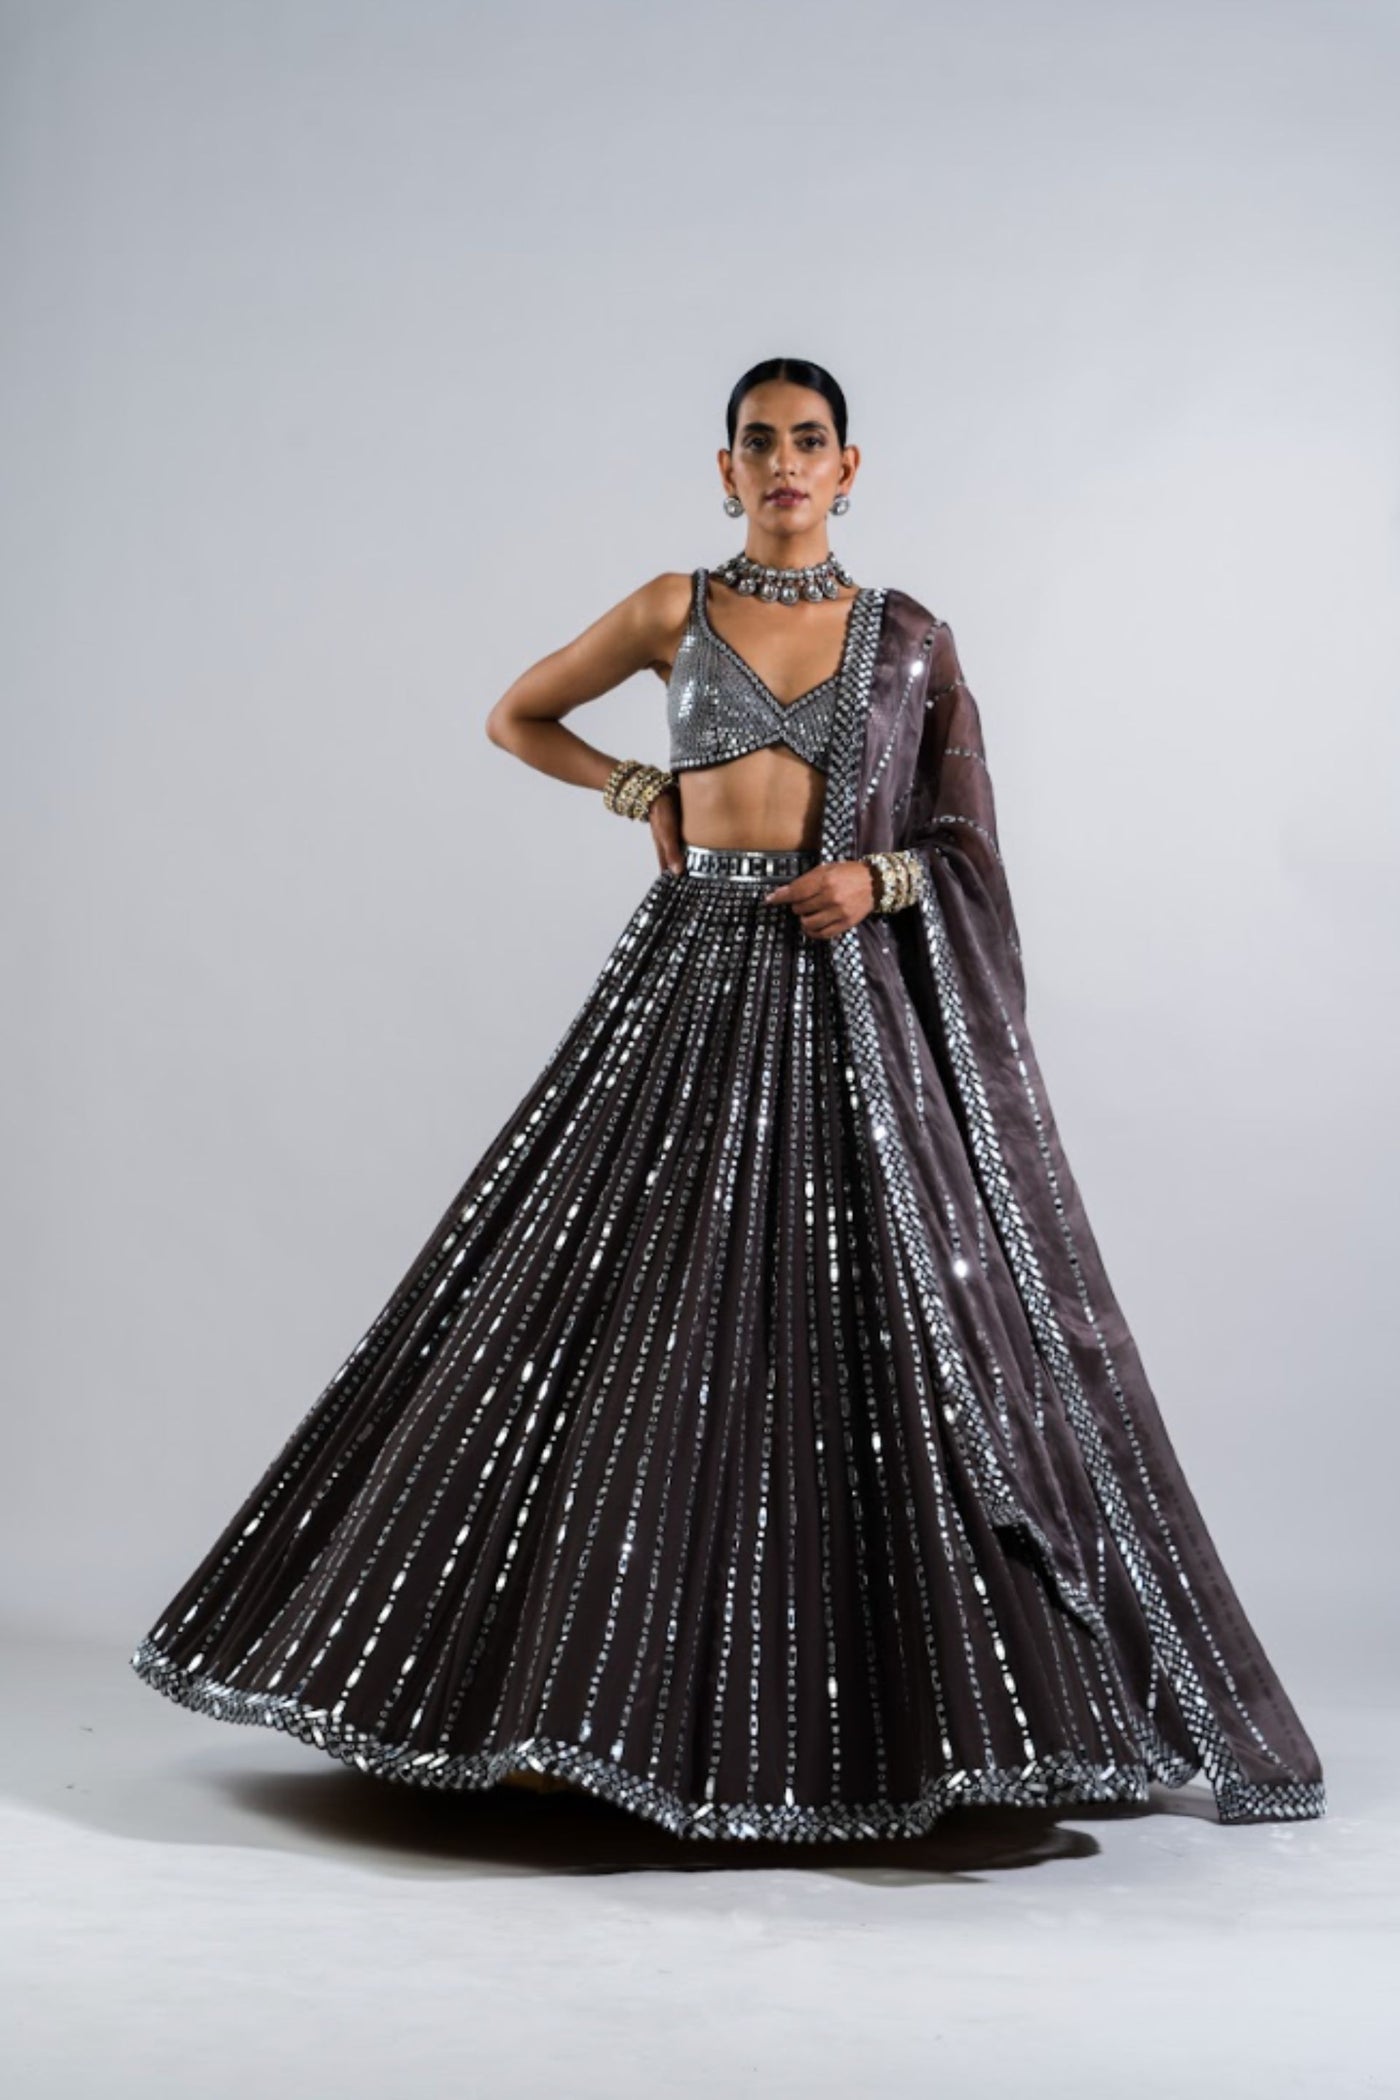 V Vani Vats Charcoal Grey Linear Drop Lehenga With Metallic Blouse Indian designer wear online shopping melange singapore